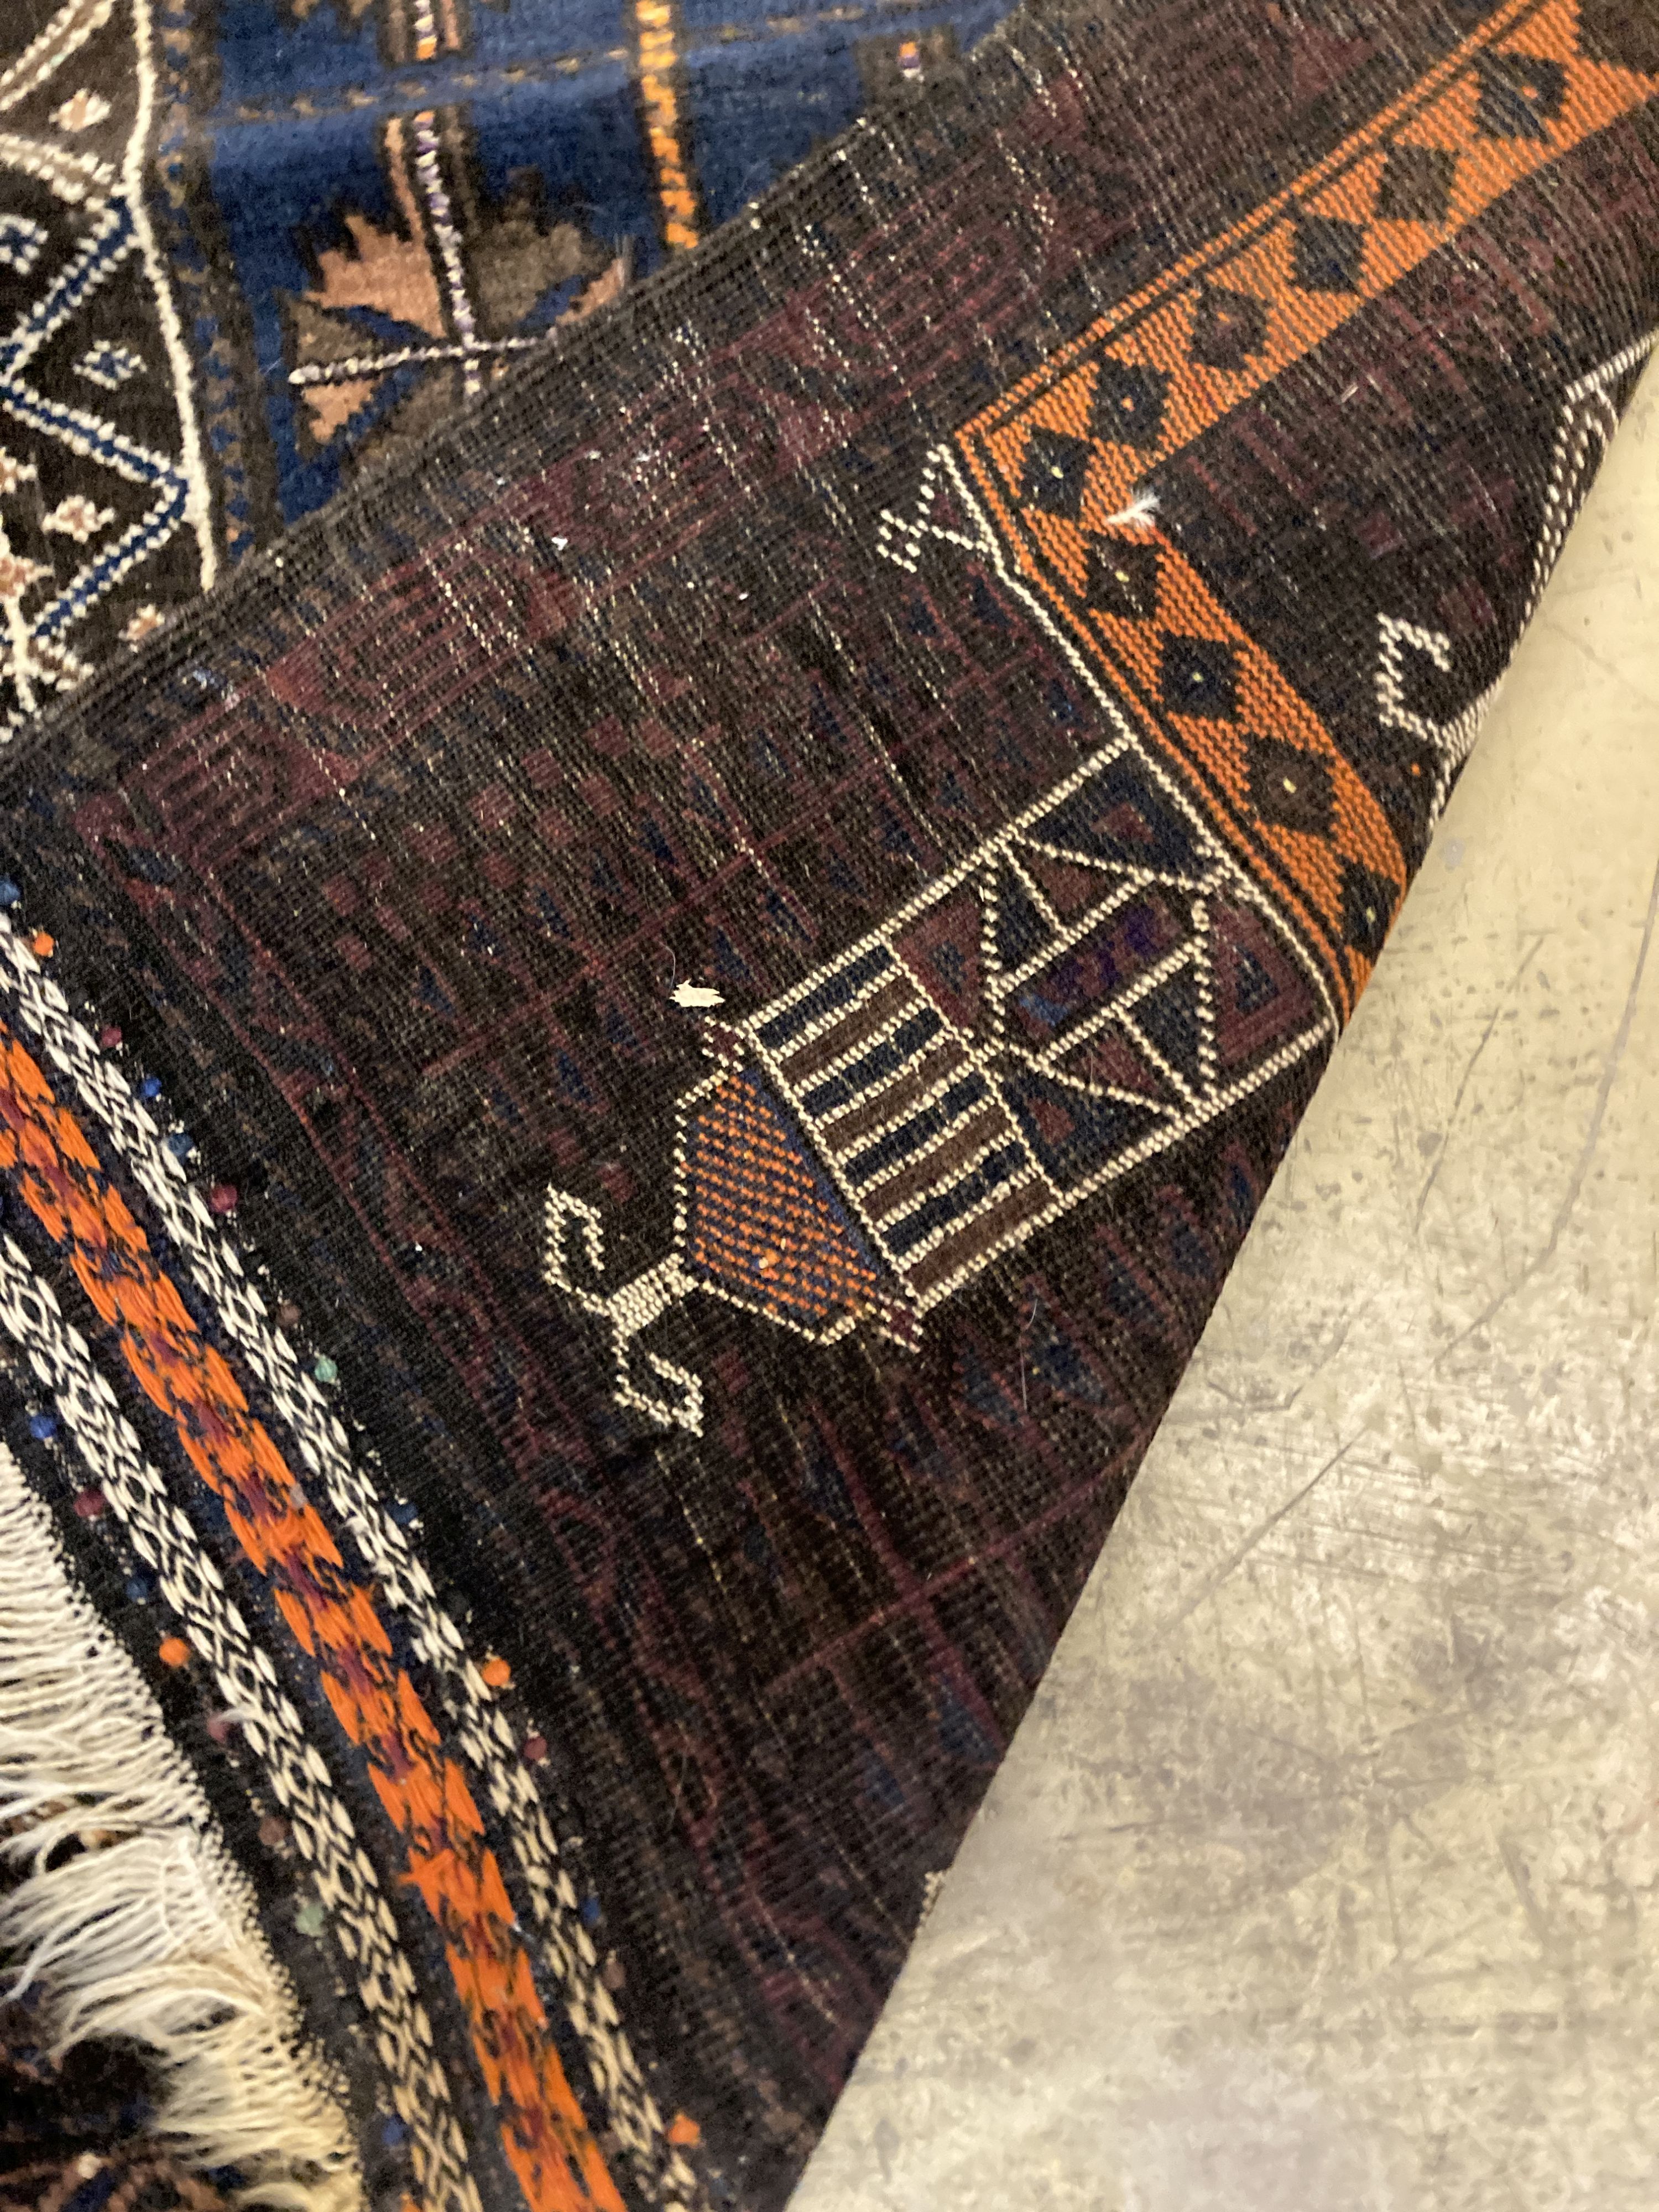 A Turkoman prayer rug and a Bokhara pattern prayer rug, larger 130 x 90cm